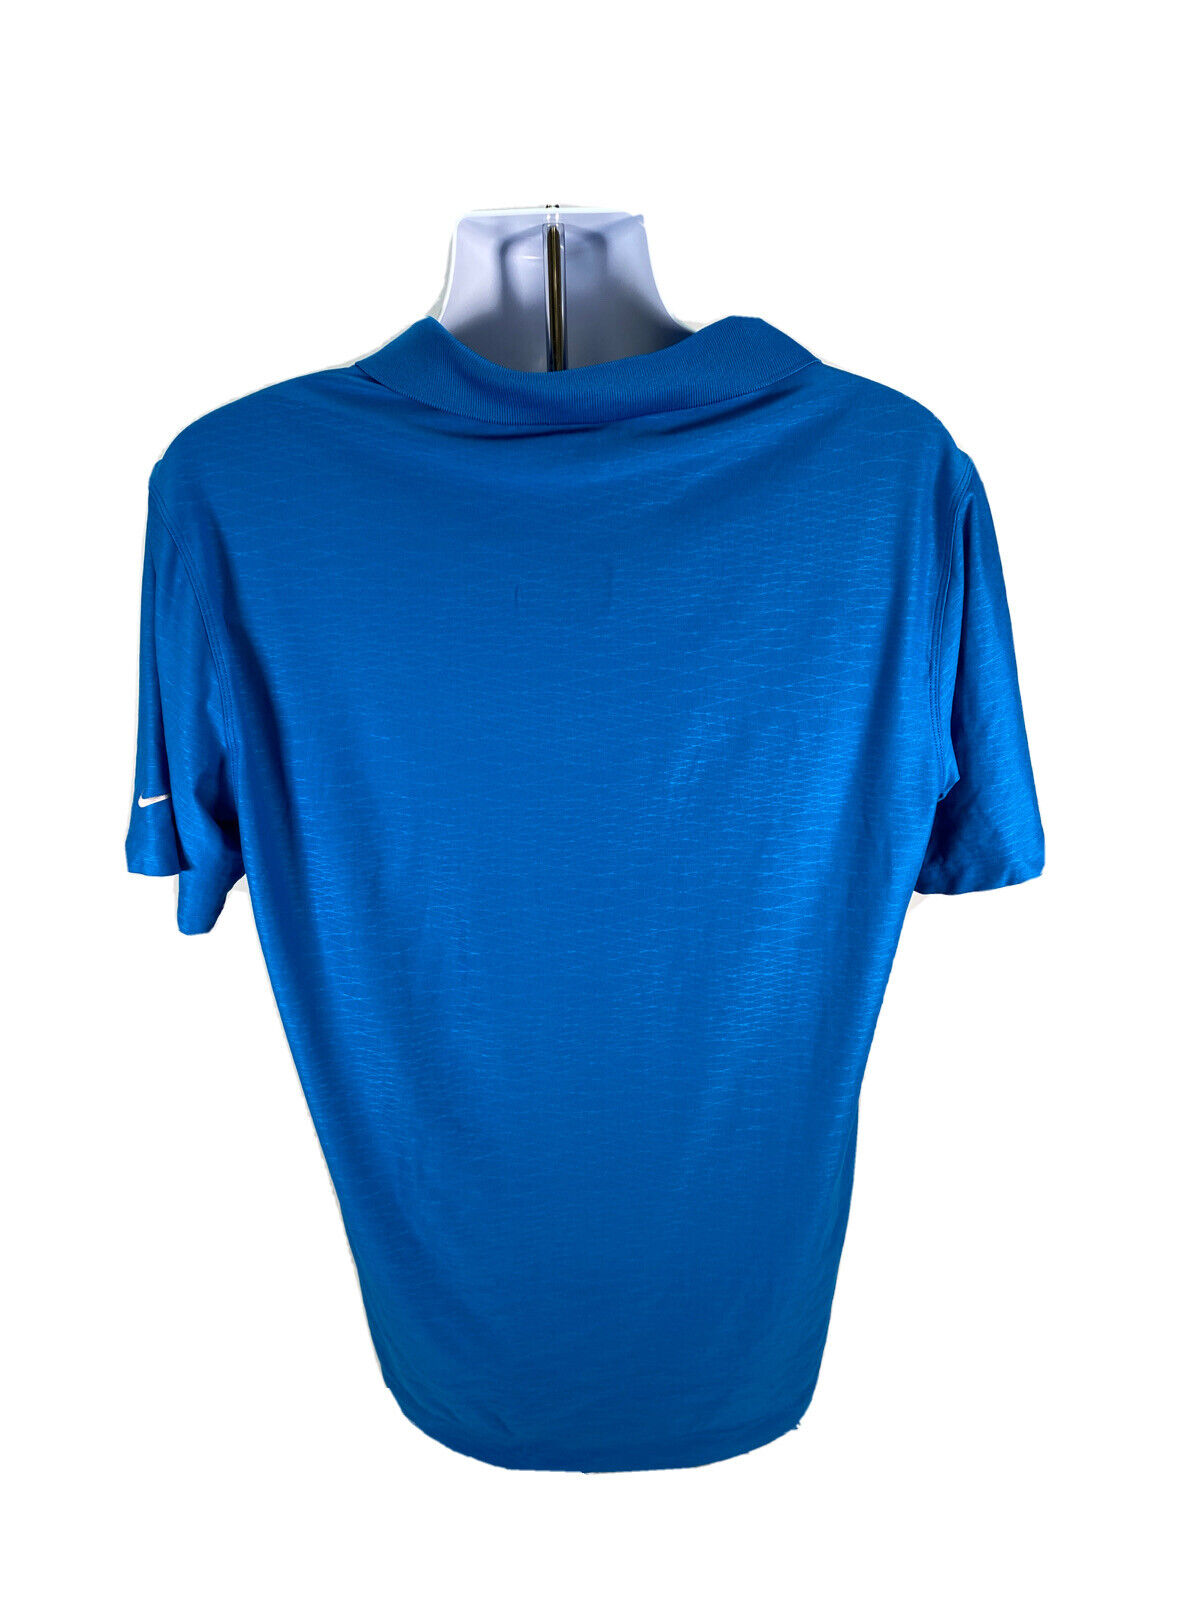 Nike Men's Blue Short Sleeve Dri-Fit Golf Polo Shirt Sz M